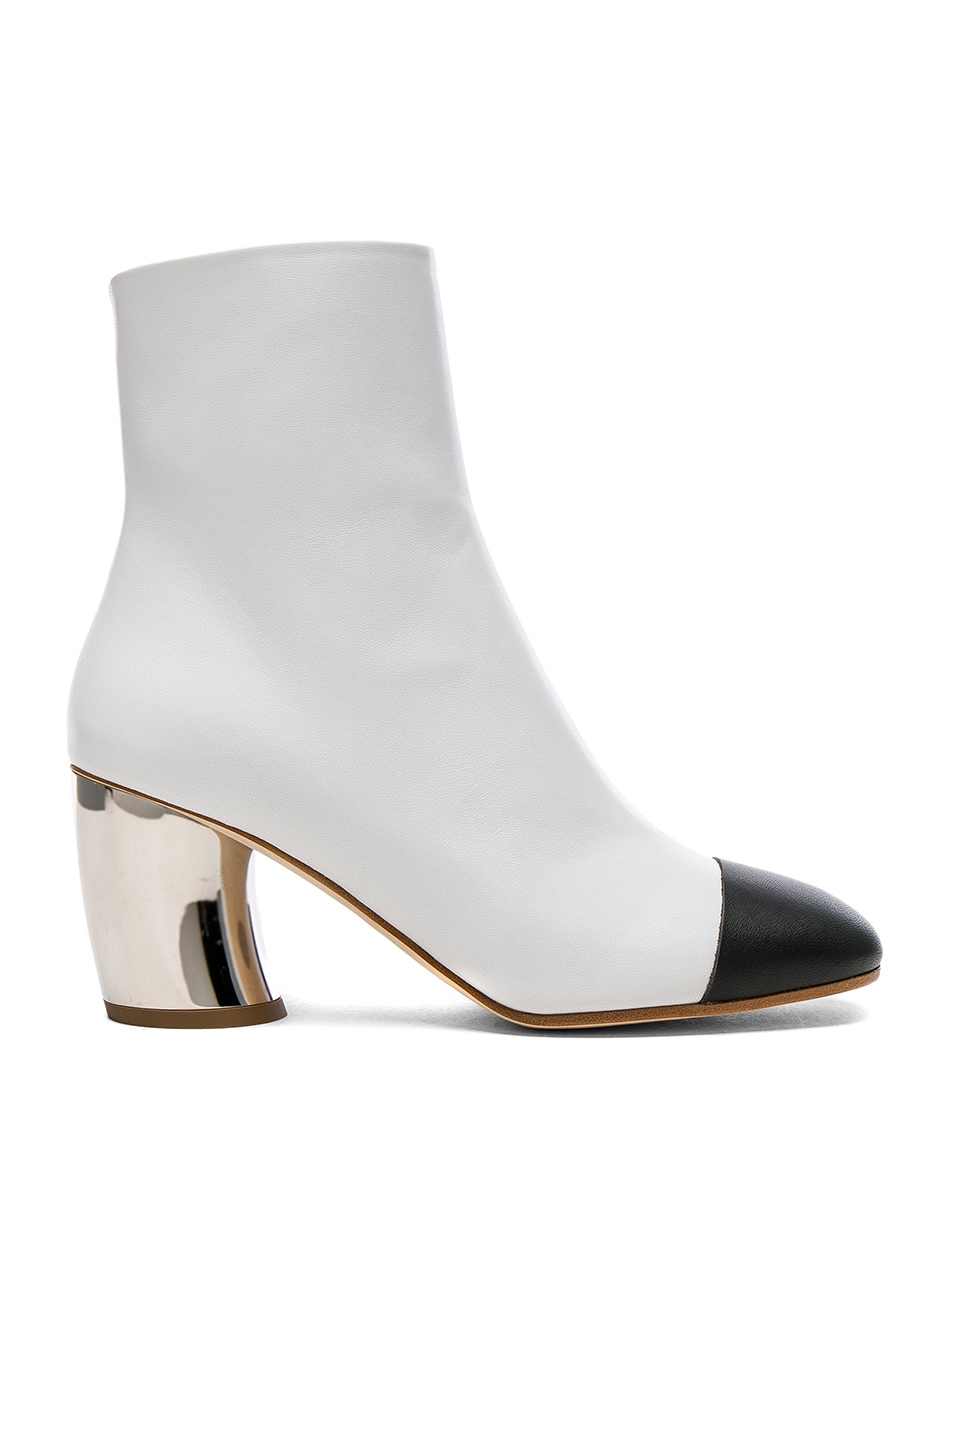 Image 1 of Proenza Schouler Silver Heel Boots in White & Black